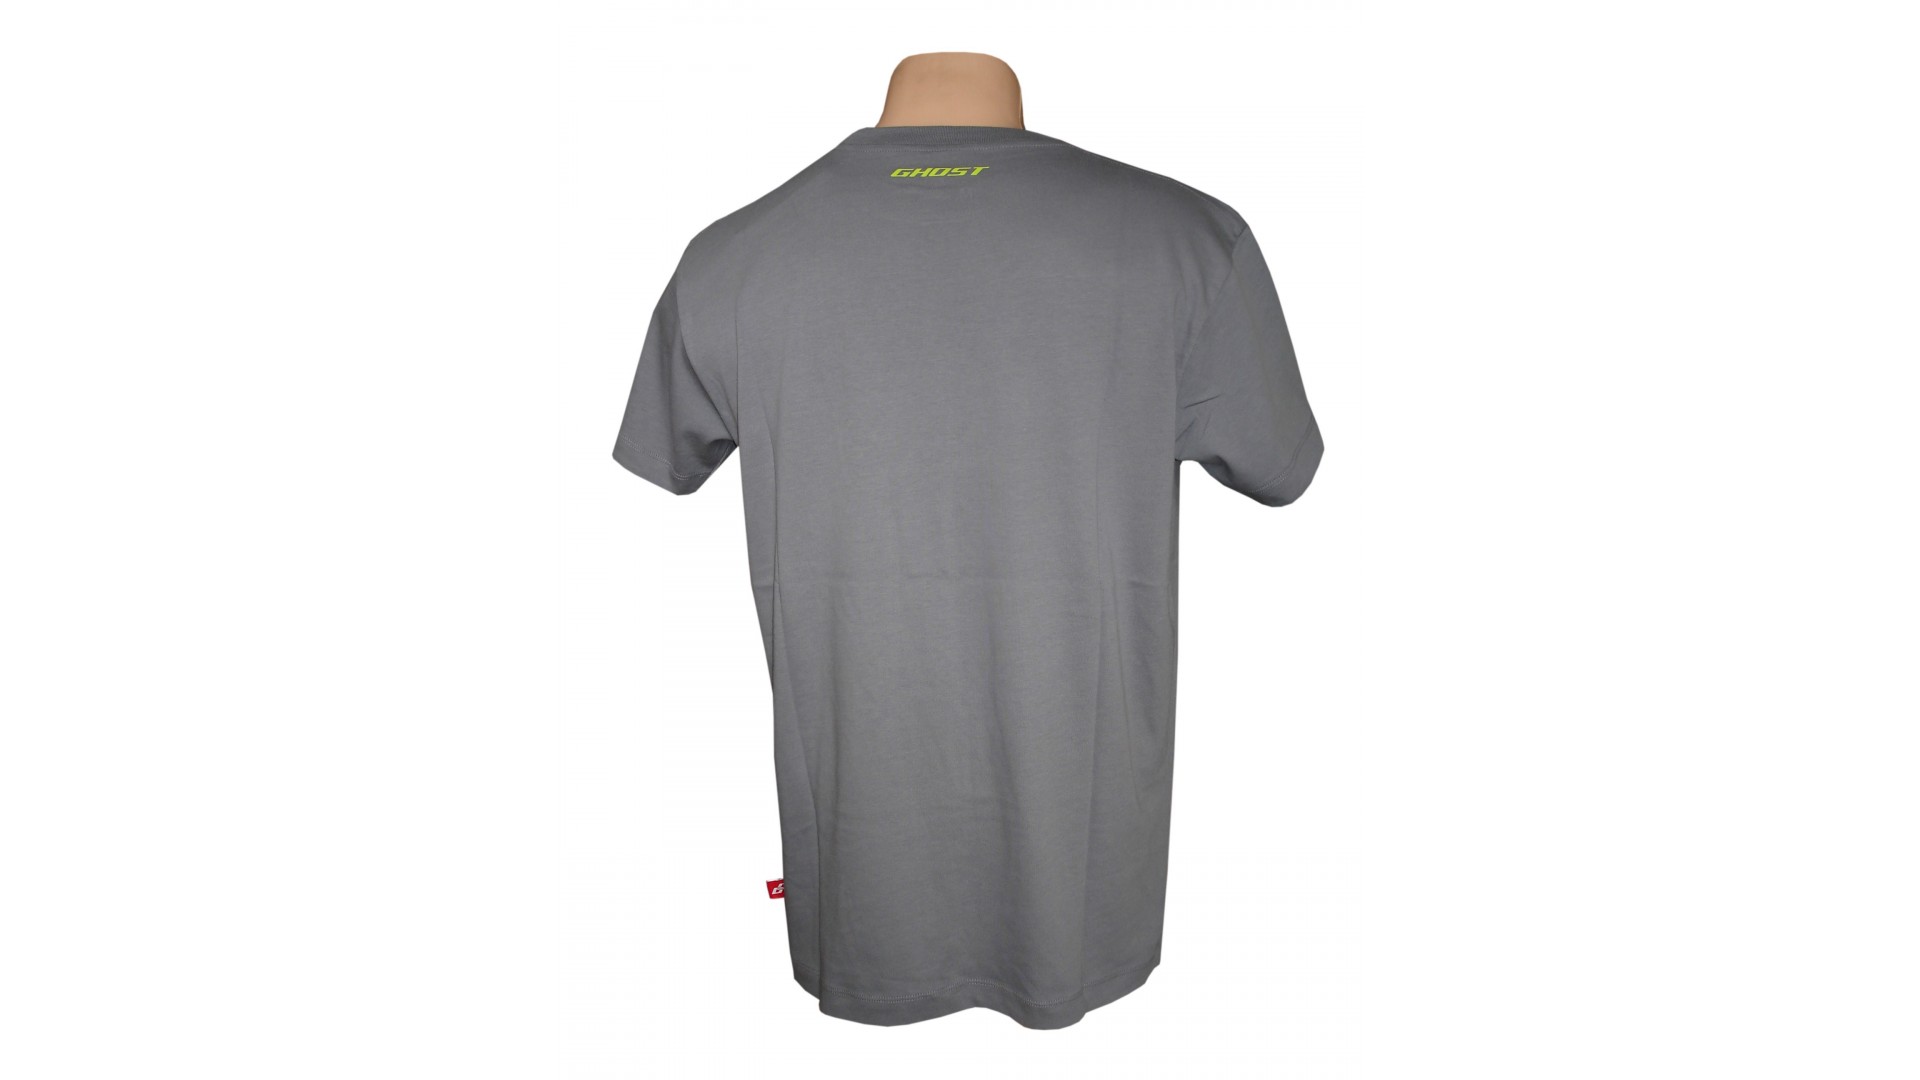 Футболка Ghost T-shirt grey год 2014 вид сзади